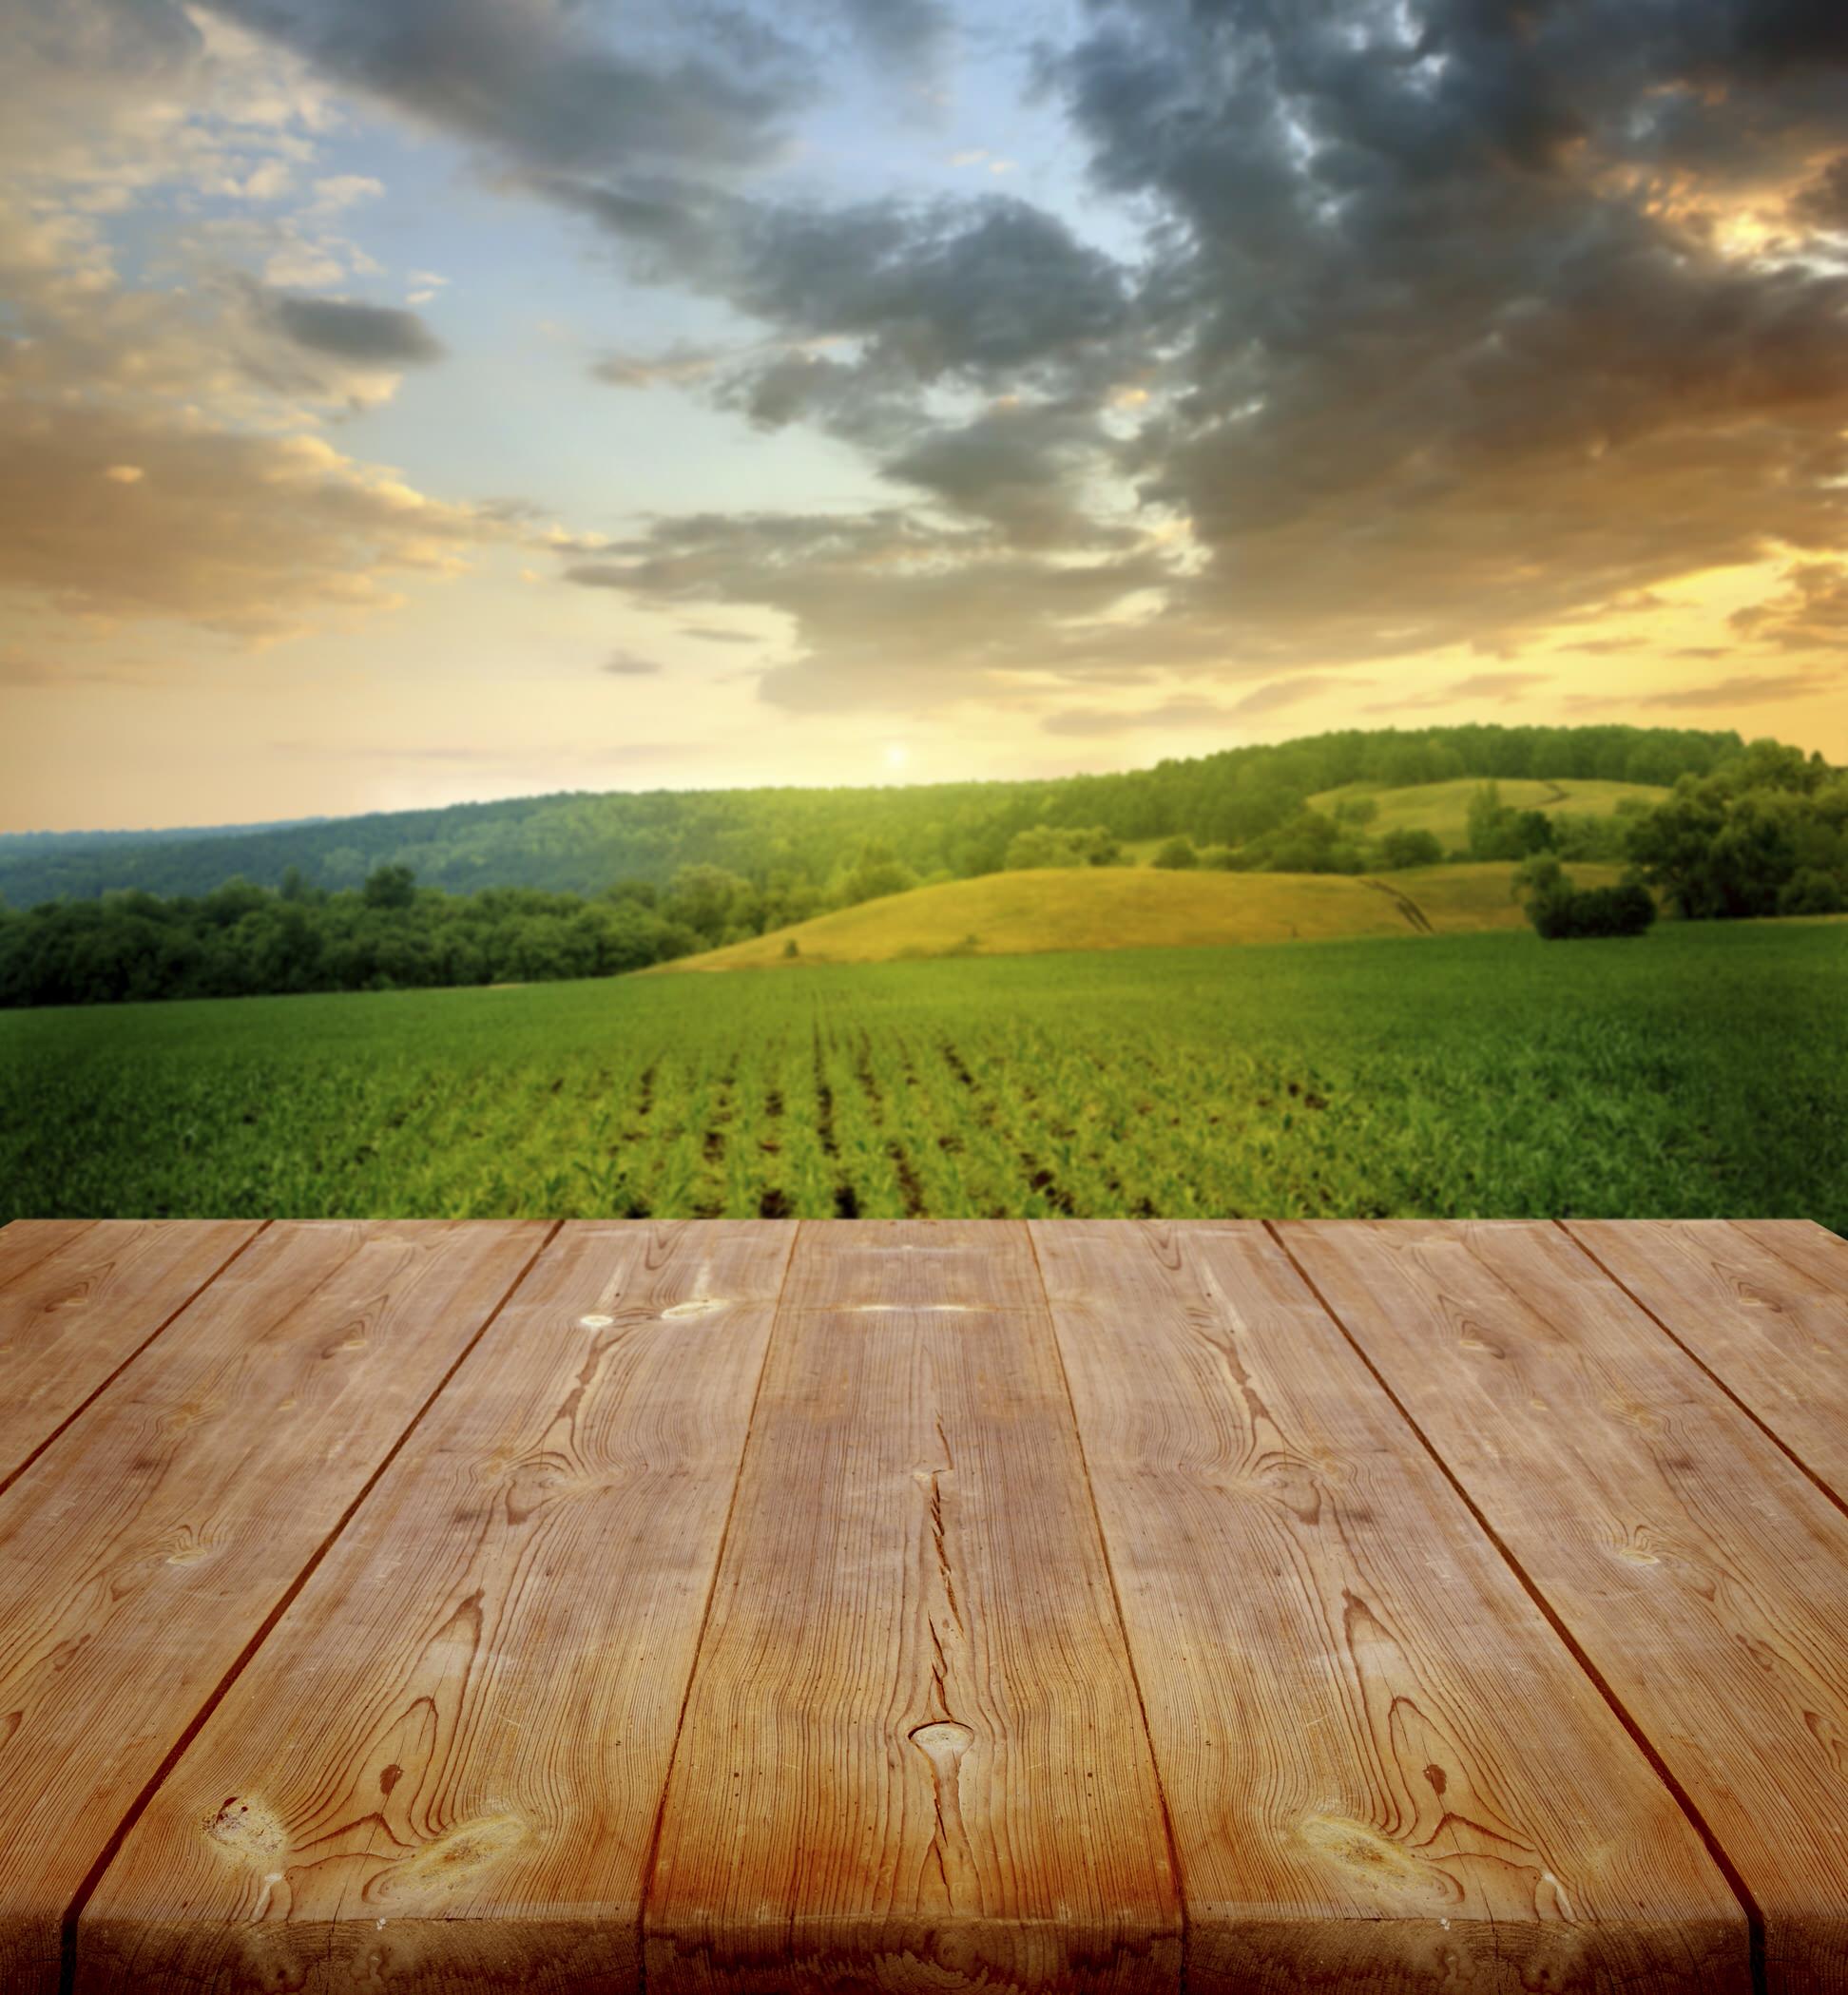 summer background with wooden planks - Harvest2U